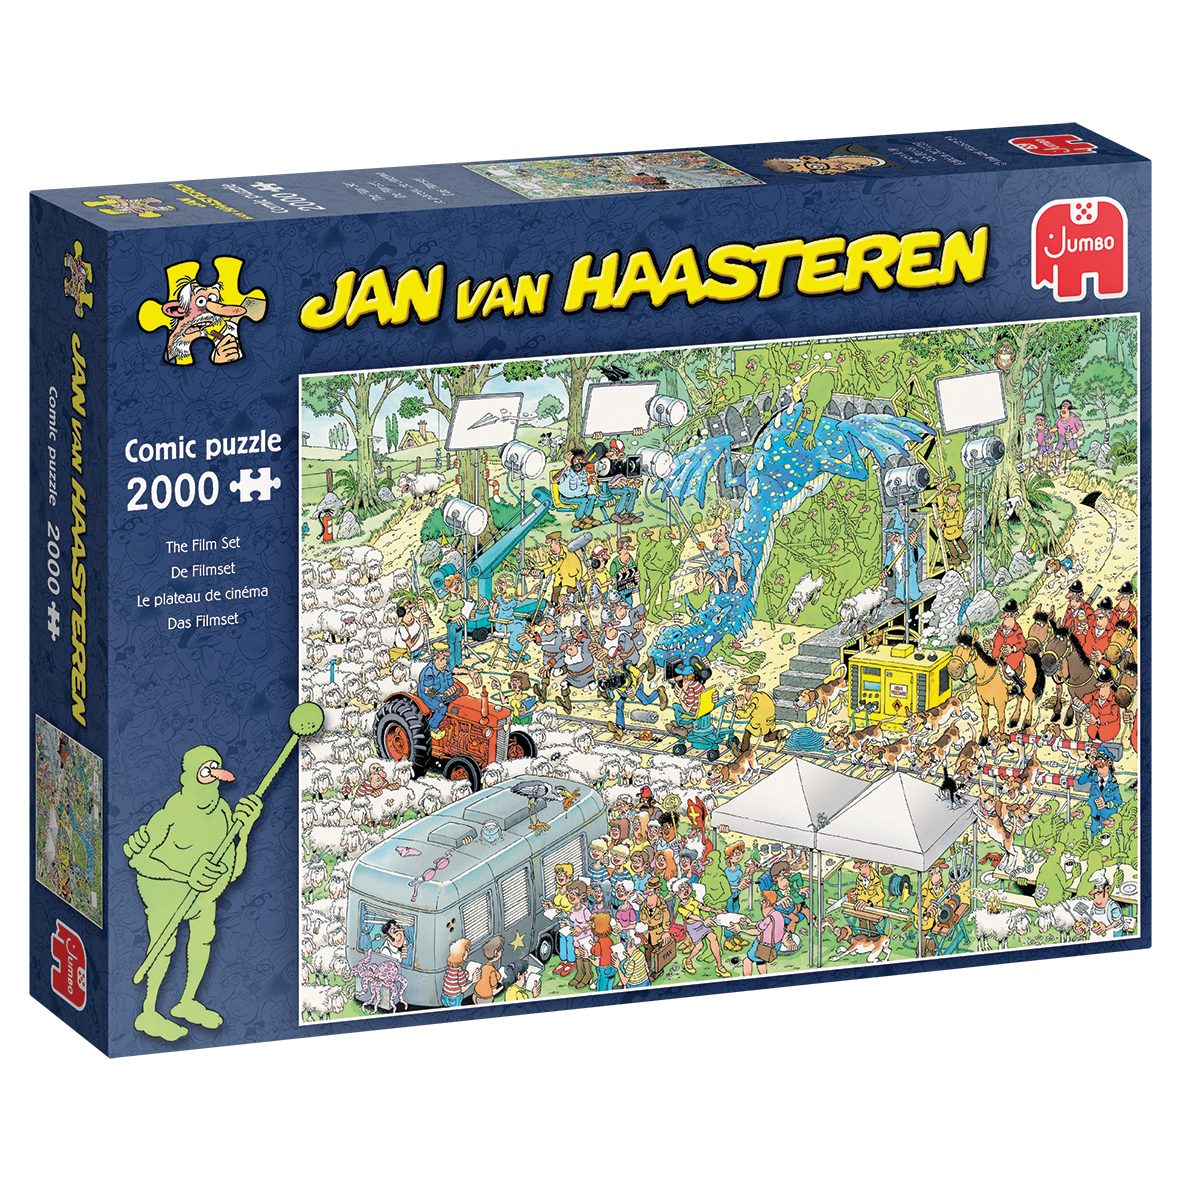 Jumbo Spiele Puzzle Jan van Das Europe Puzzle, Filmset in 2000 2000 Teile Haasteren Puzzleteile, Made